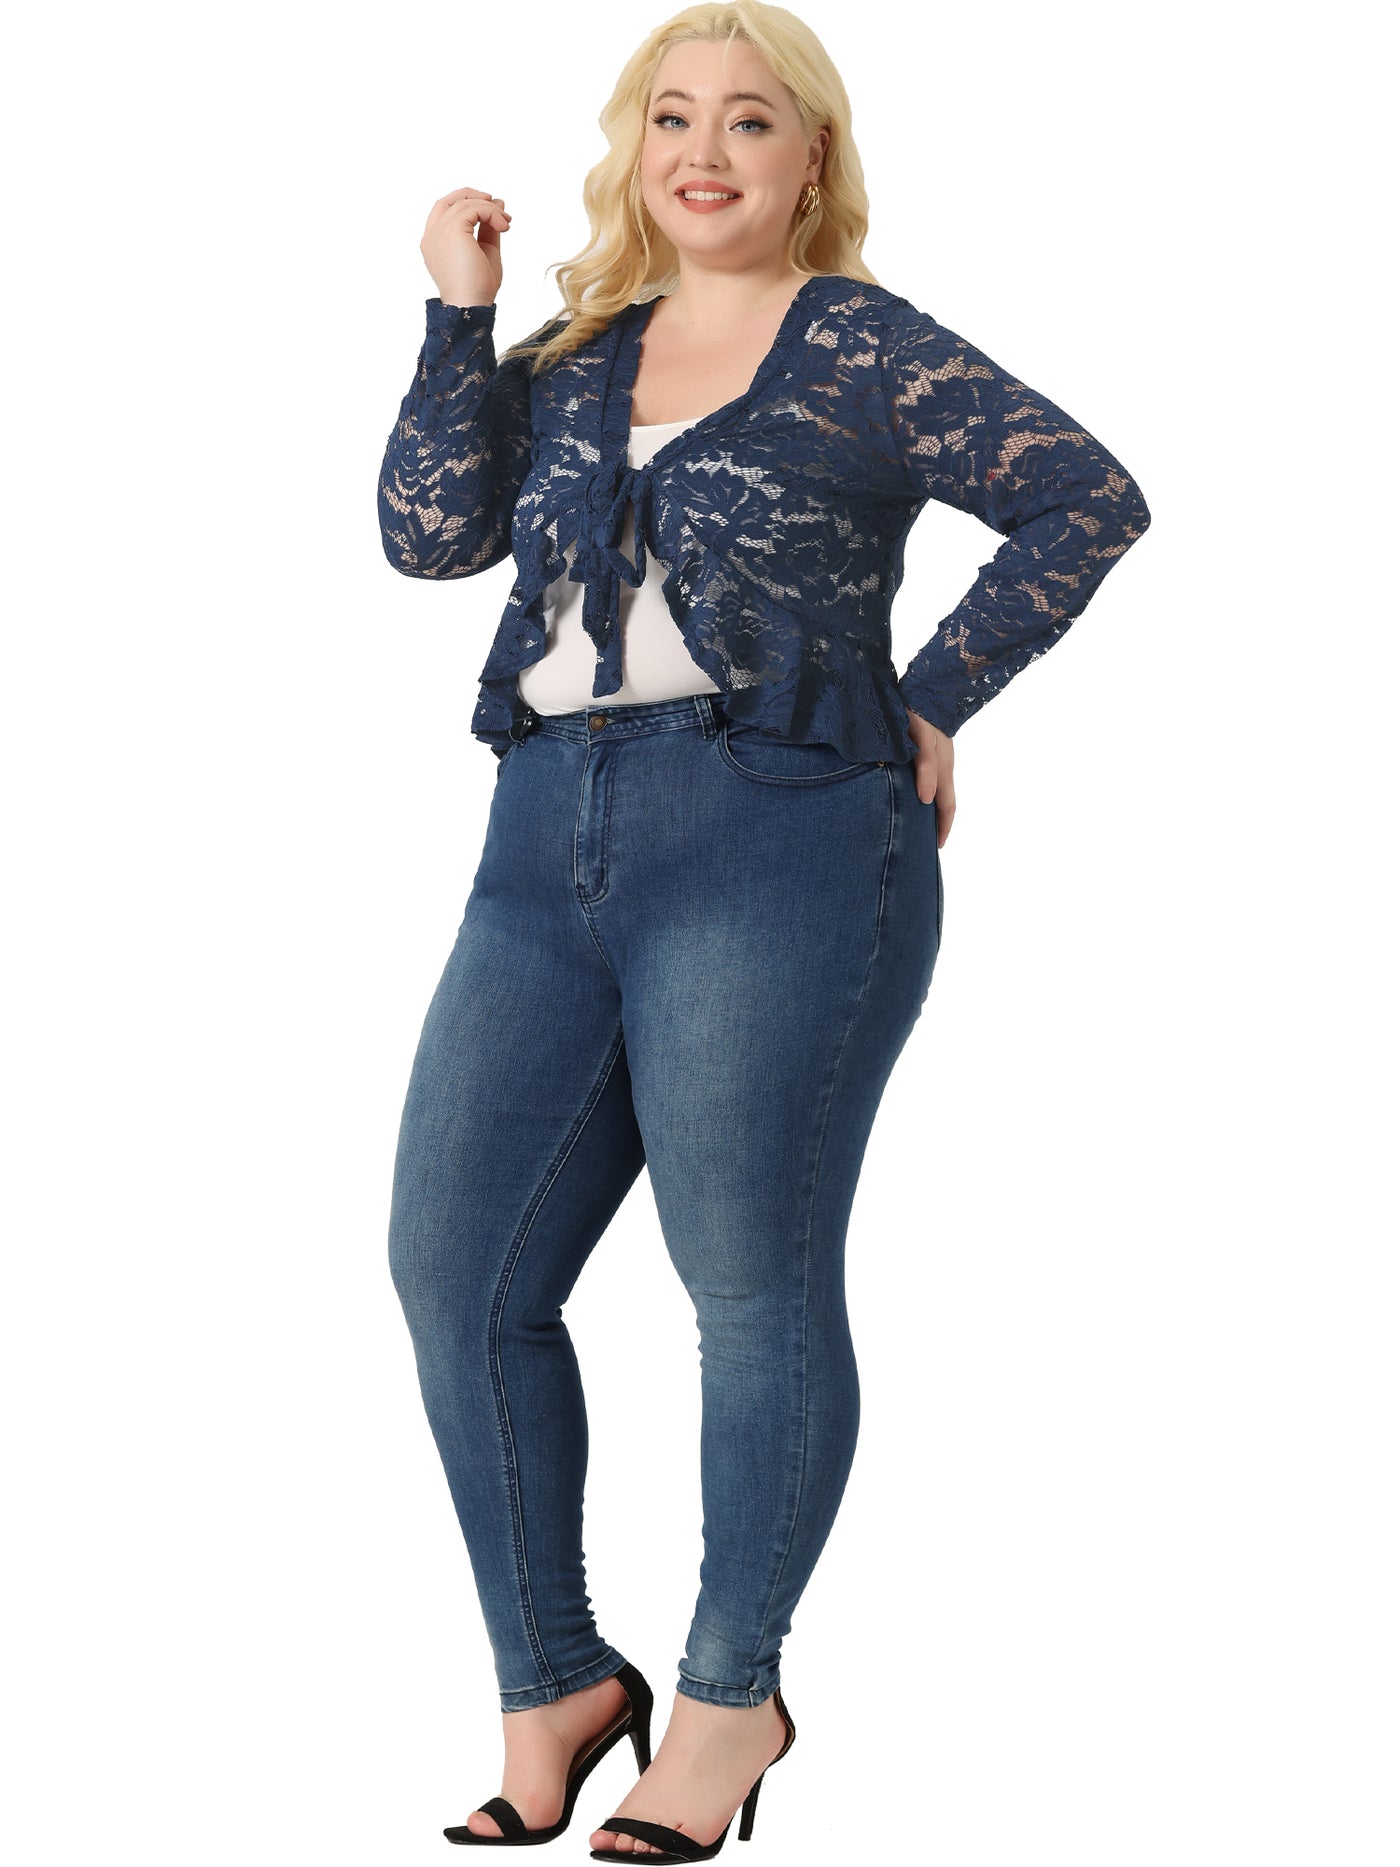 Bublédon Plus Size Cardigan for Women Bolero Shrug 3/4 Sleeve Tie Front Sheer Lace Crop Cardigans